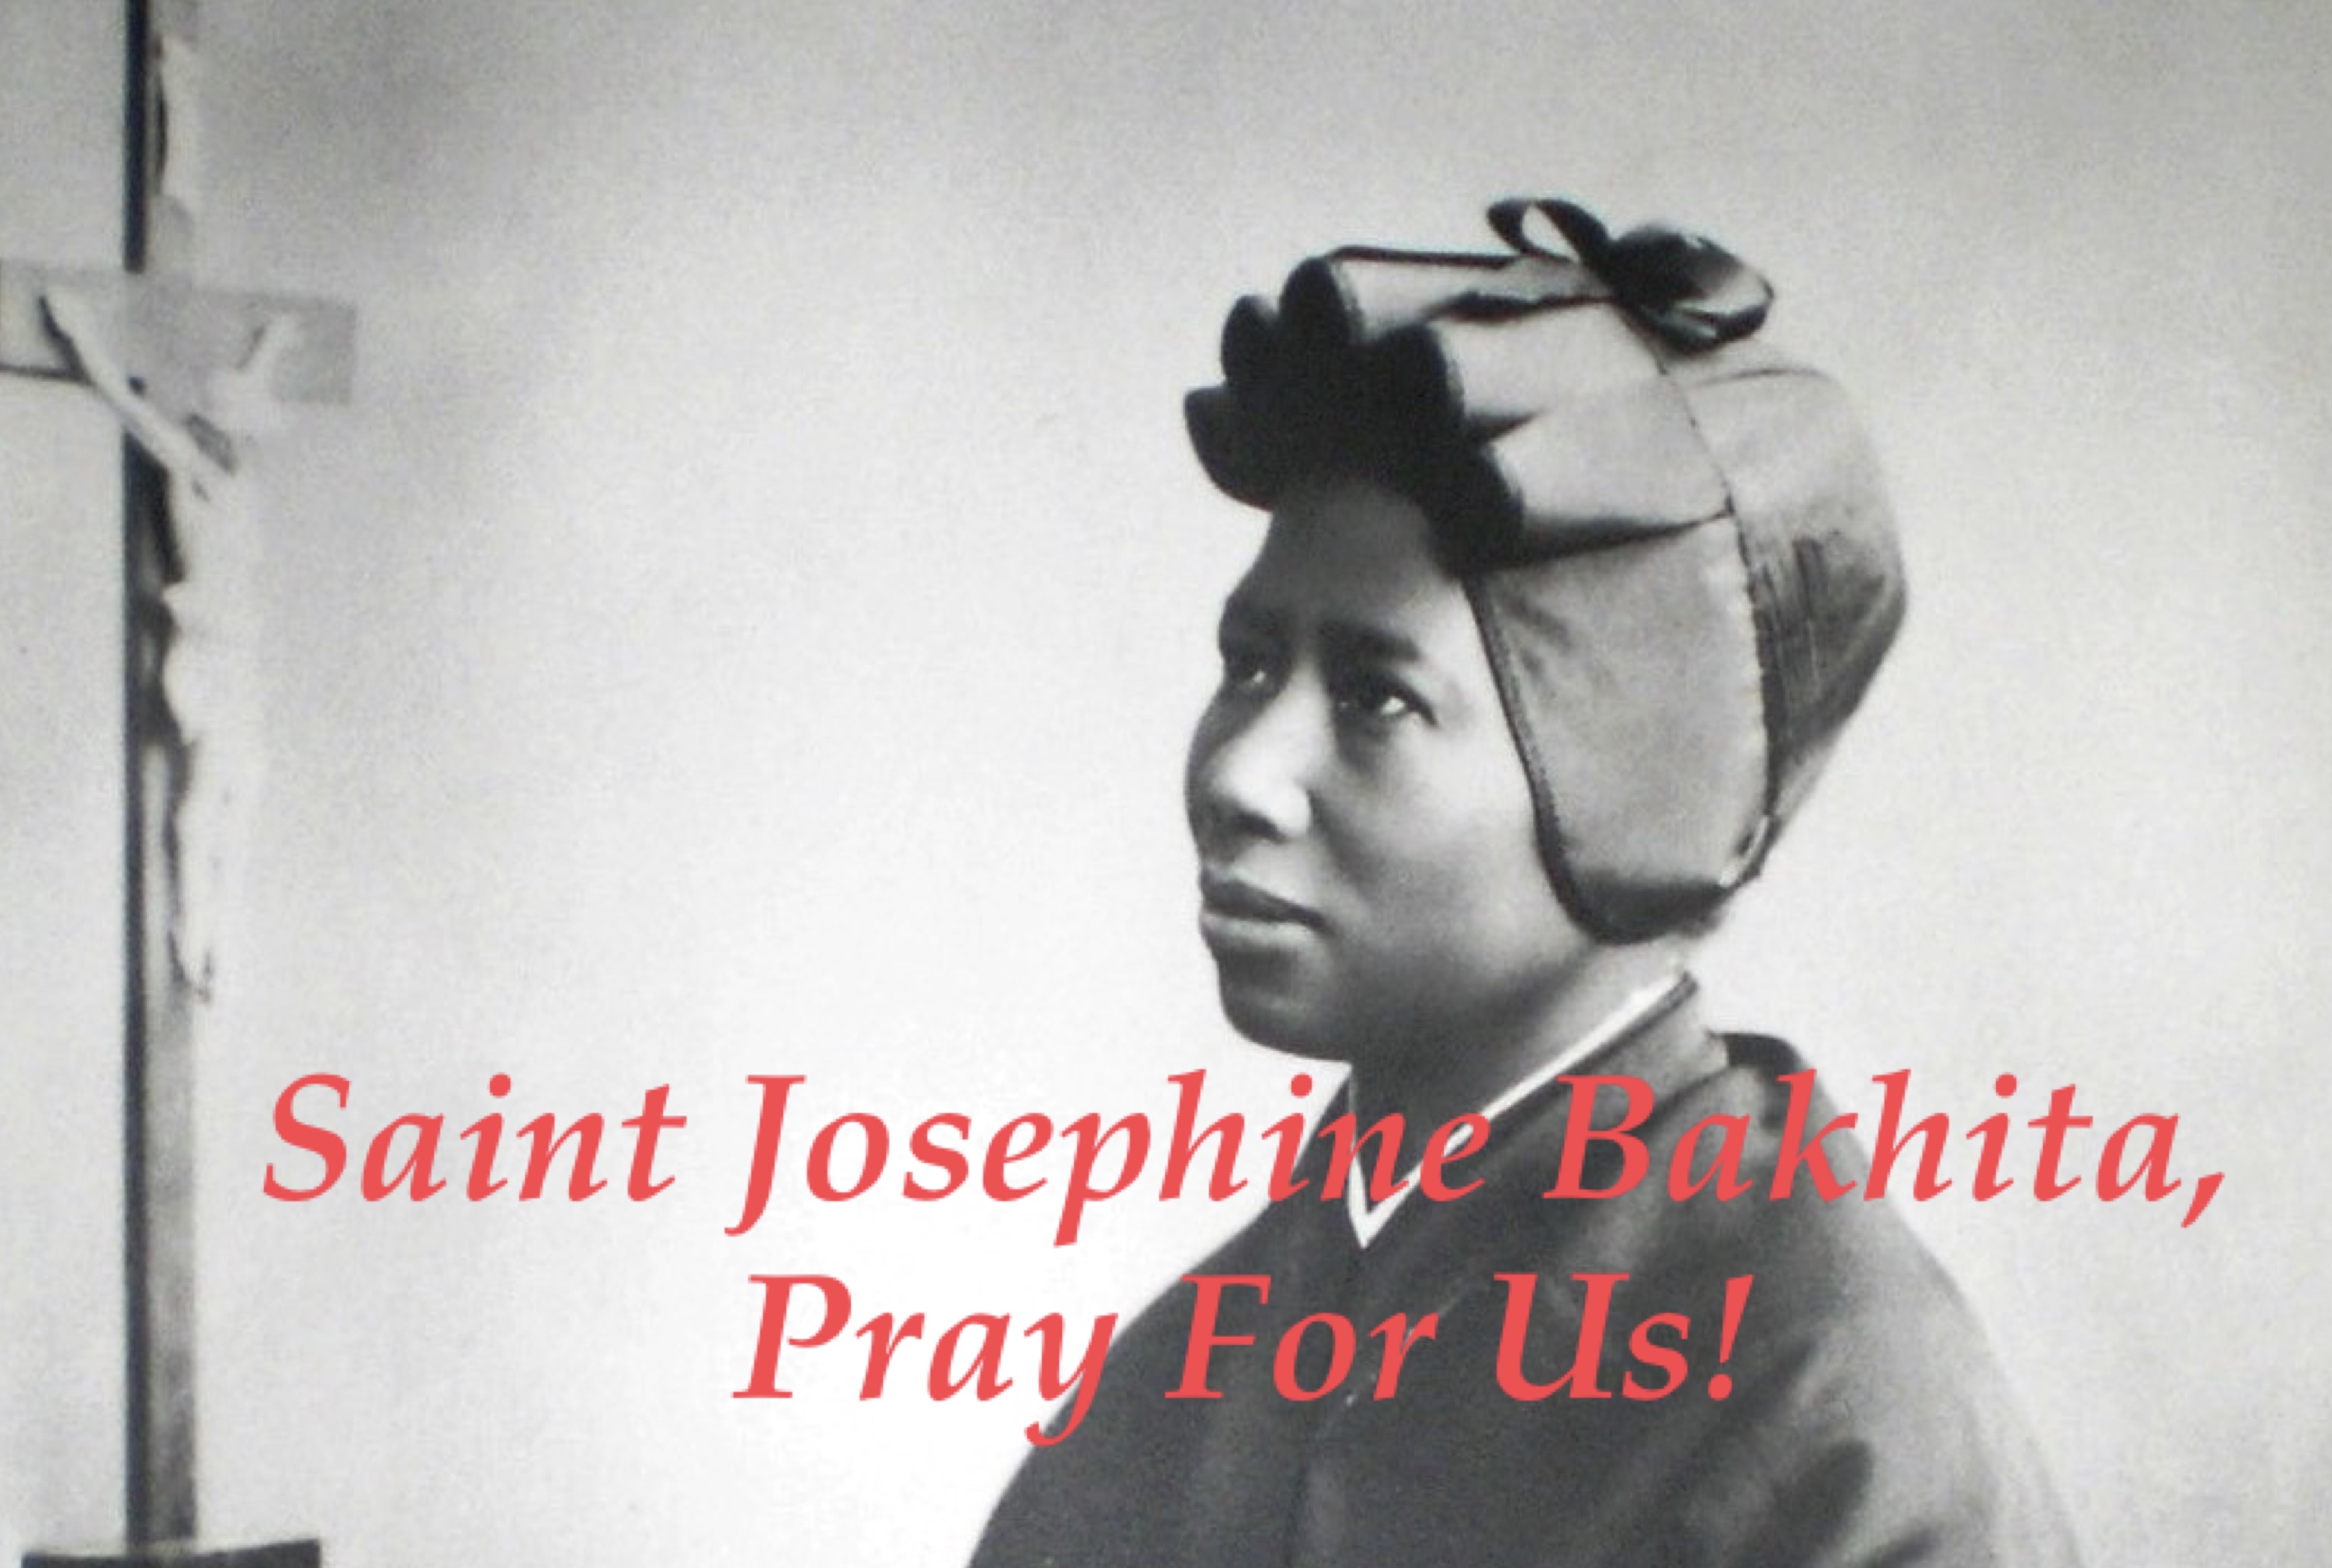 8th February - Saint Josephine Bakhita